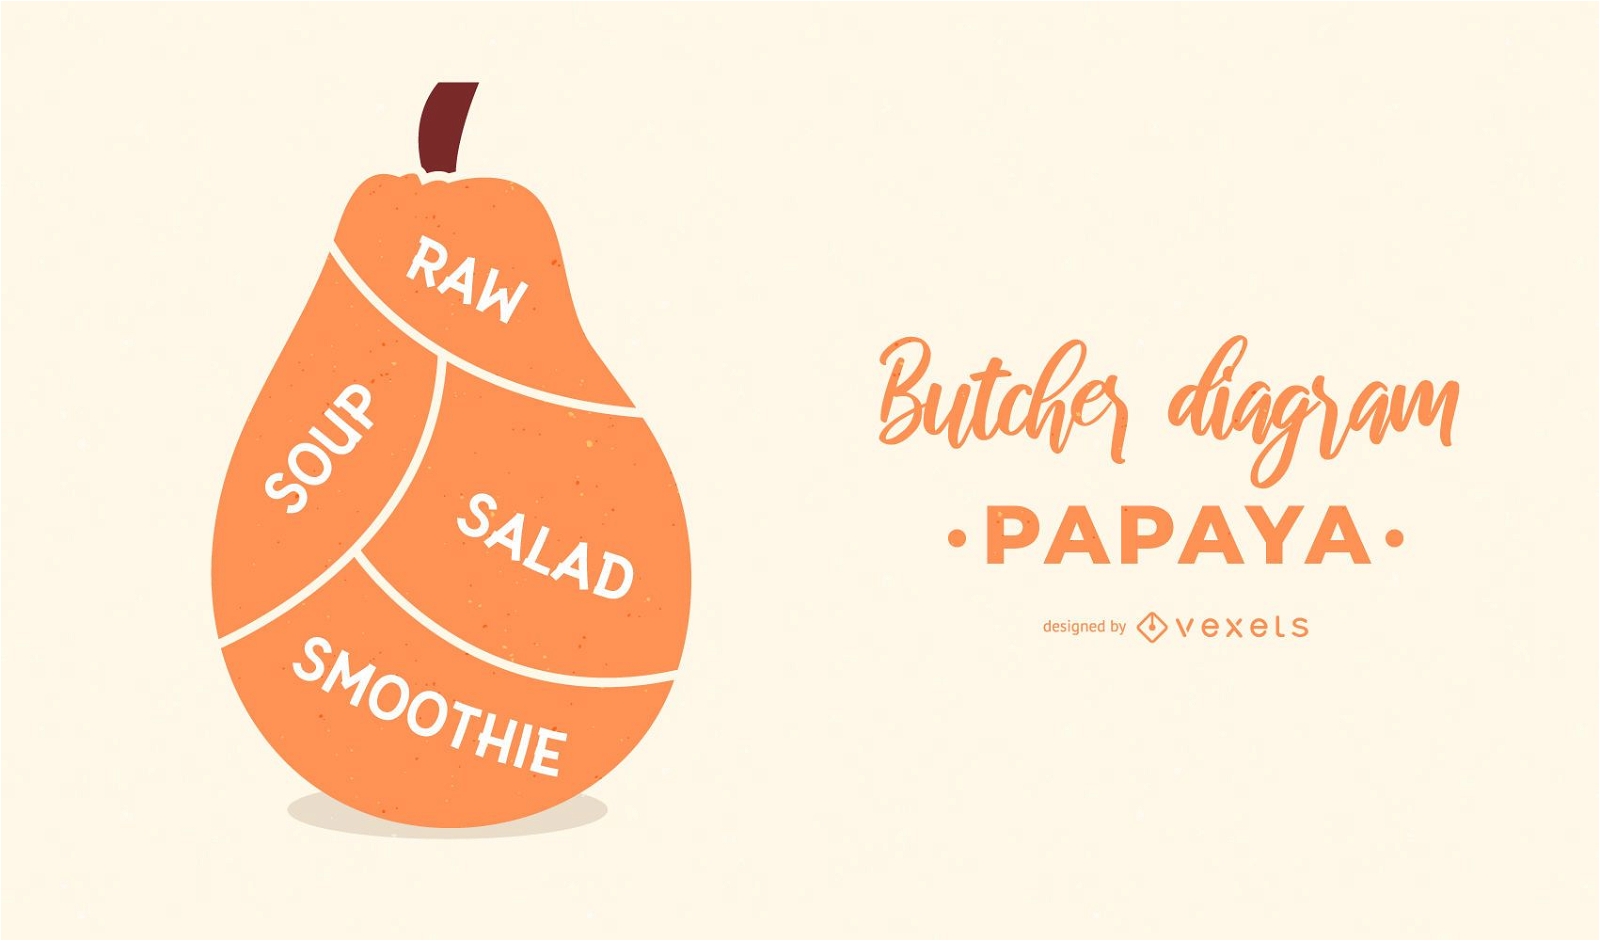 Papaya Butcher Diagram Design 